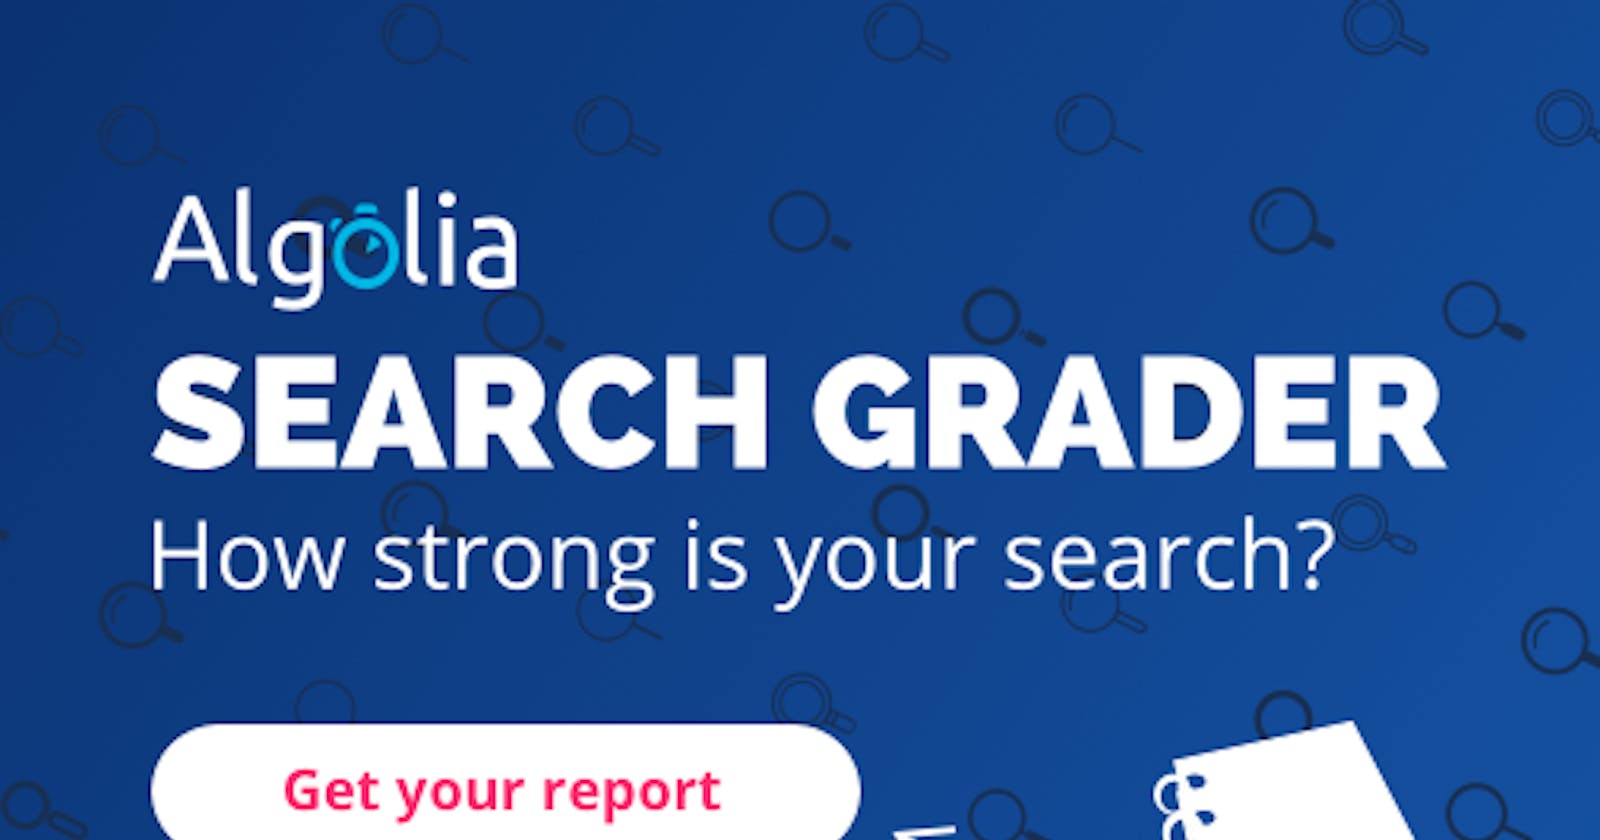 Search Grader by Algolia